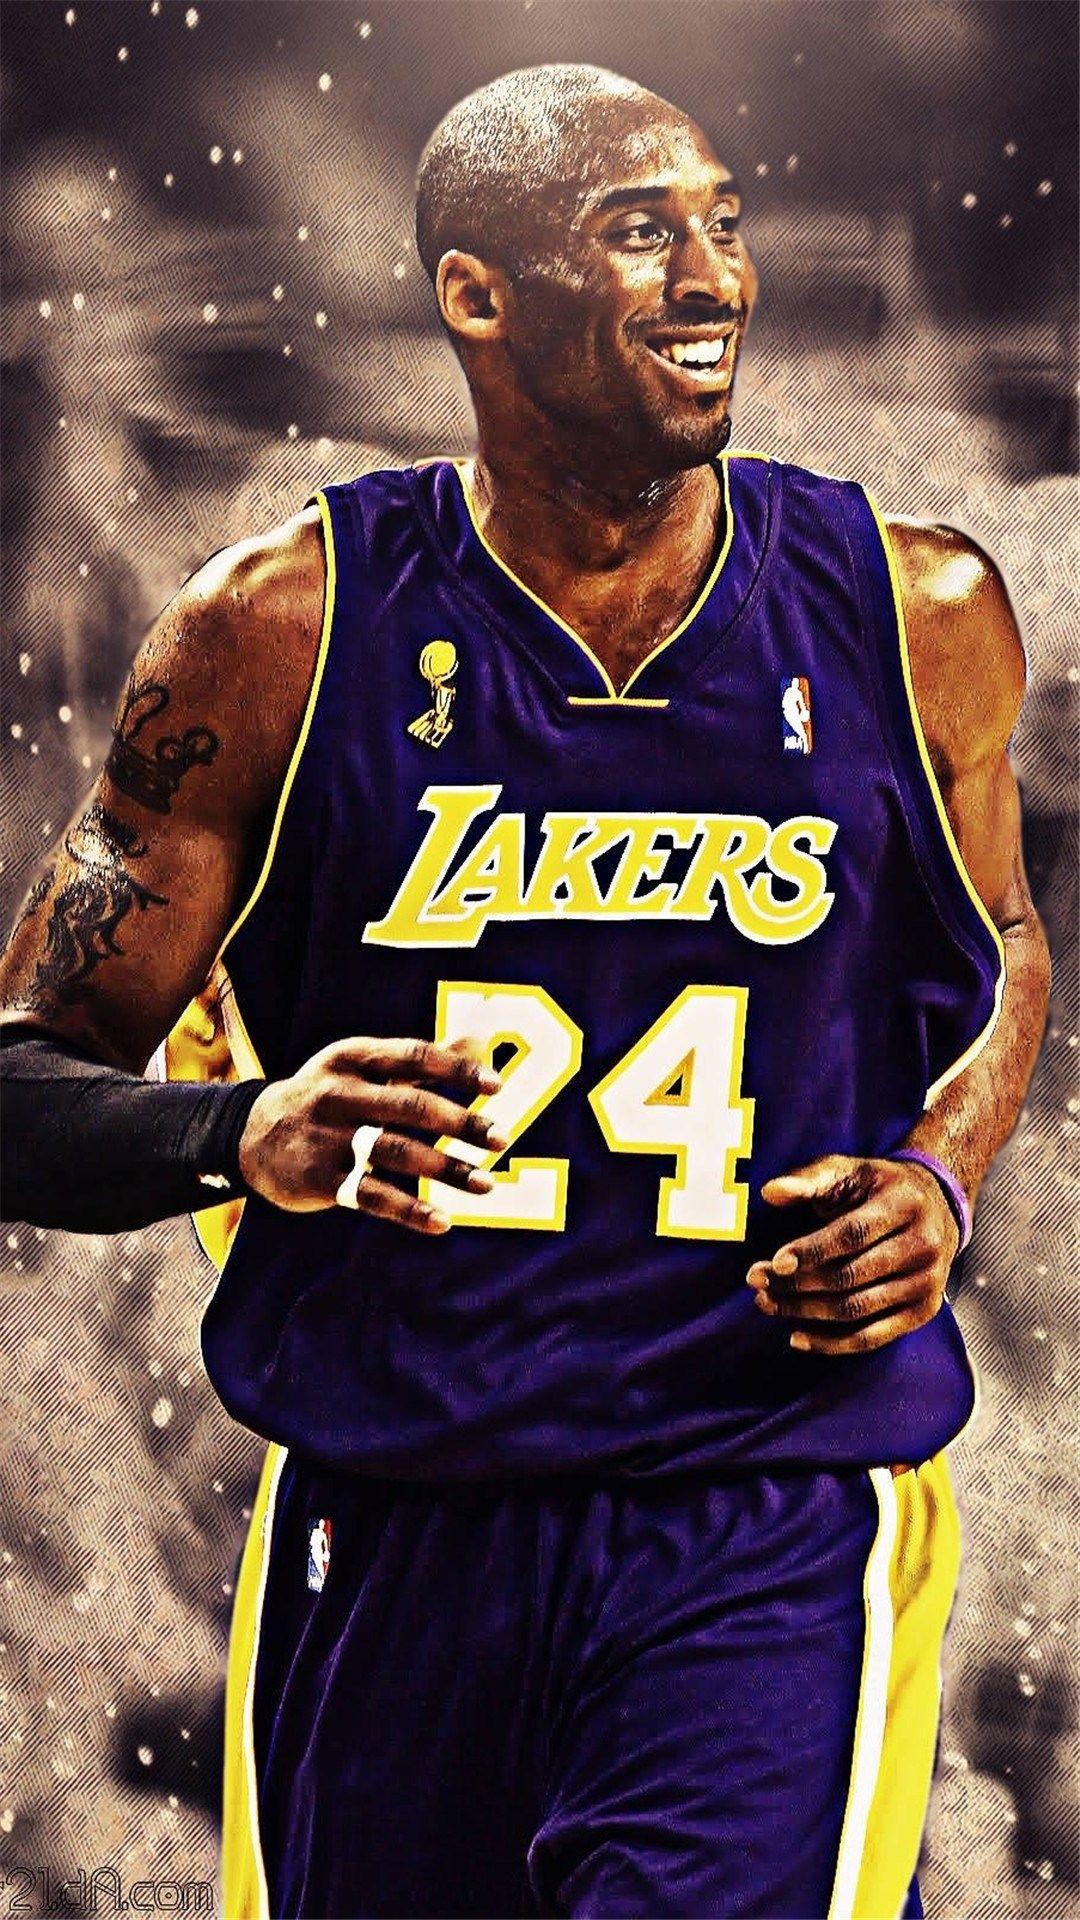 Bryant Kobe NBA Sports Super Star iPhone 6 Wallpaper Download. iPhone Wallpaper, iPad wallpaper. Kobe bryant wallpaper, Kobe bryant poster, Kobe bryant picture